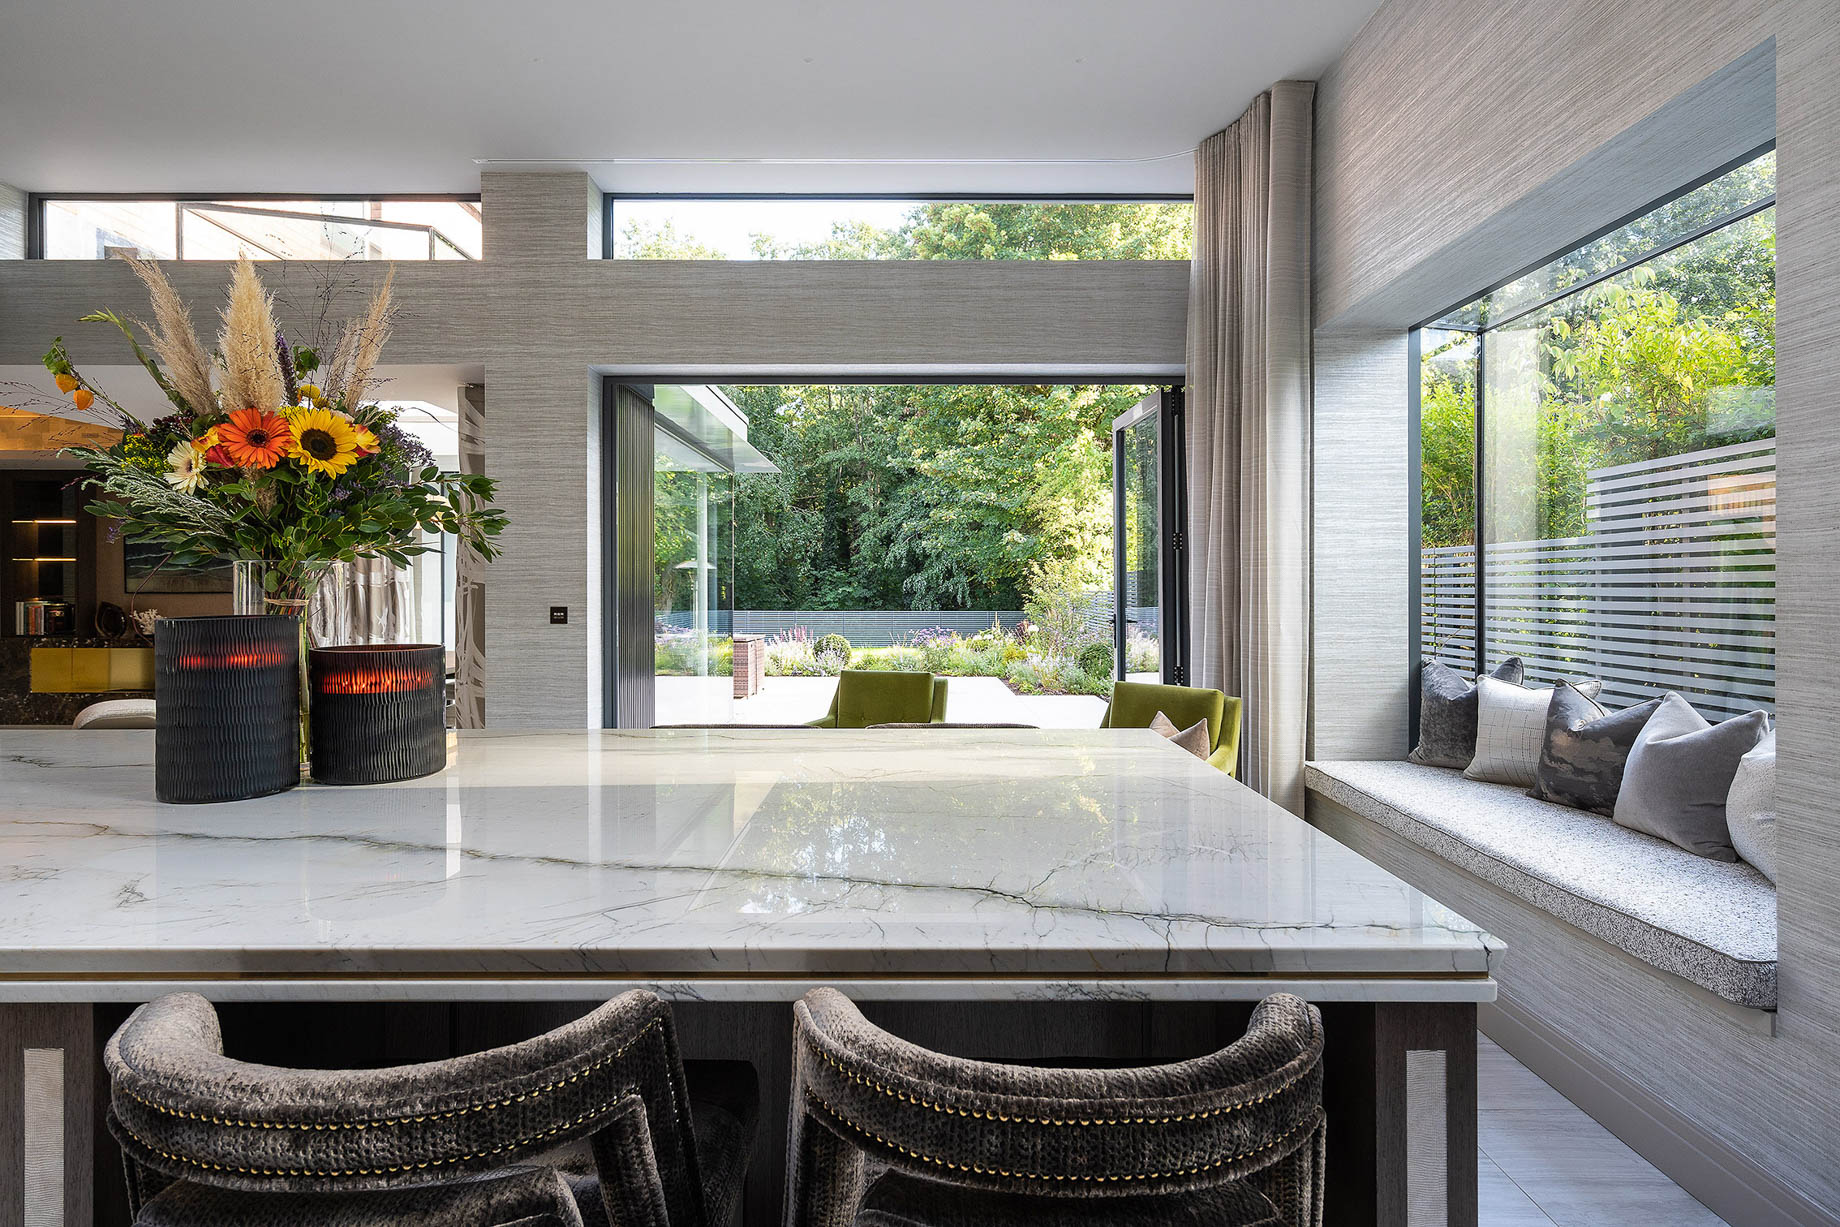 Kensington Home Interior Design London, UK – Kris Turnbull